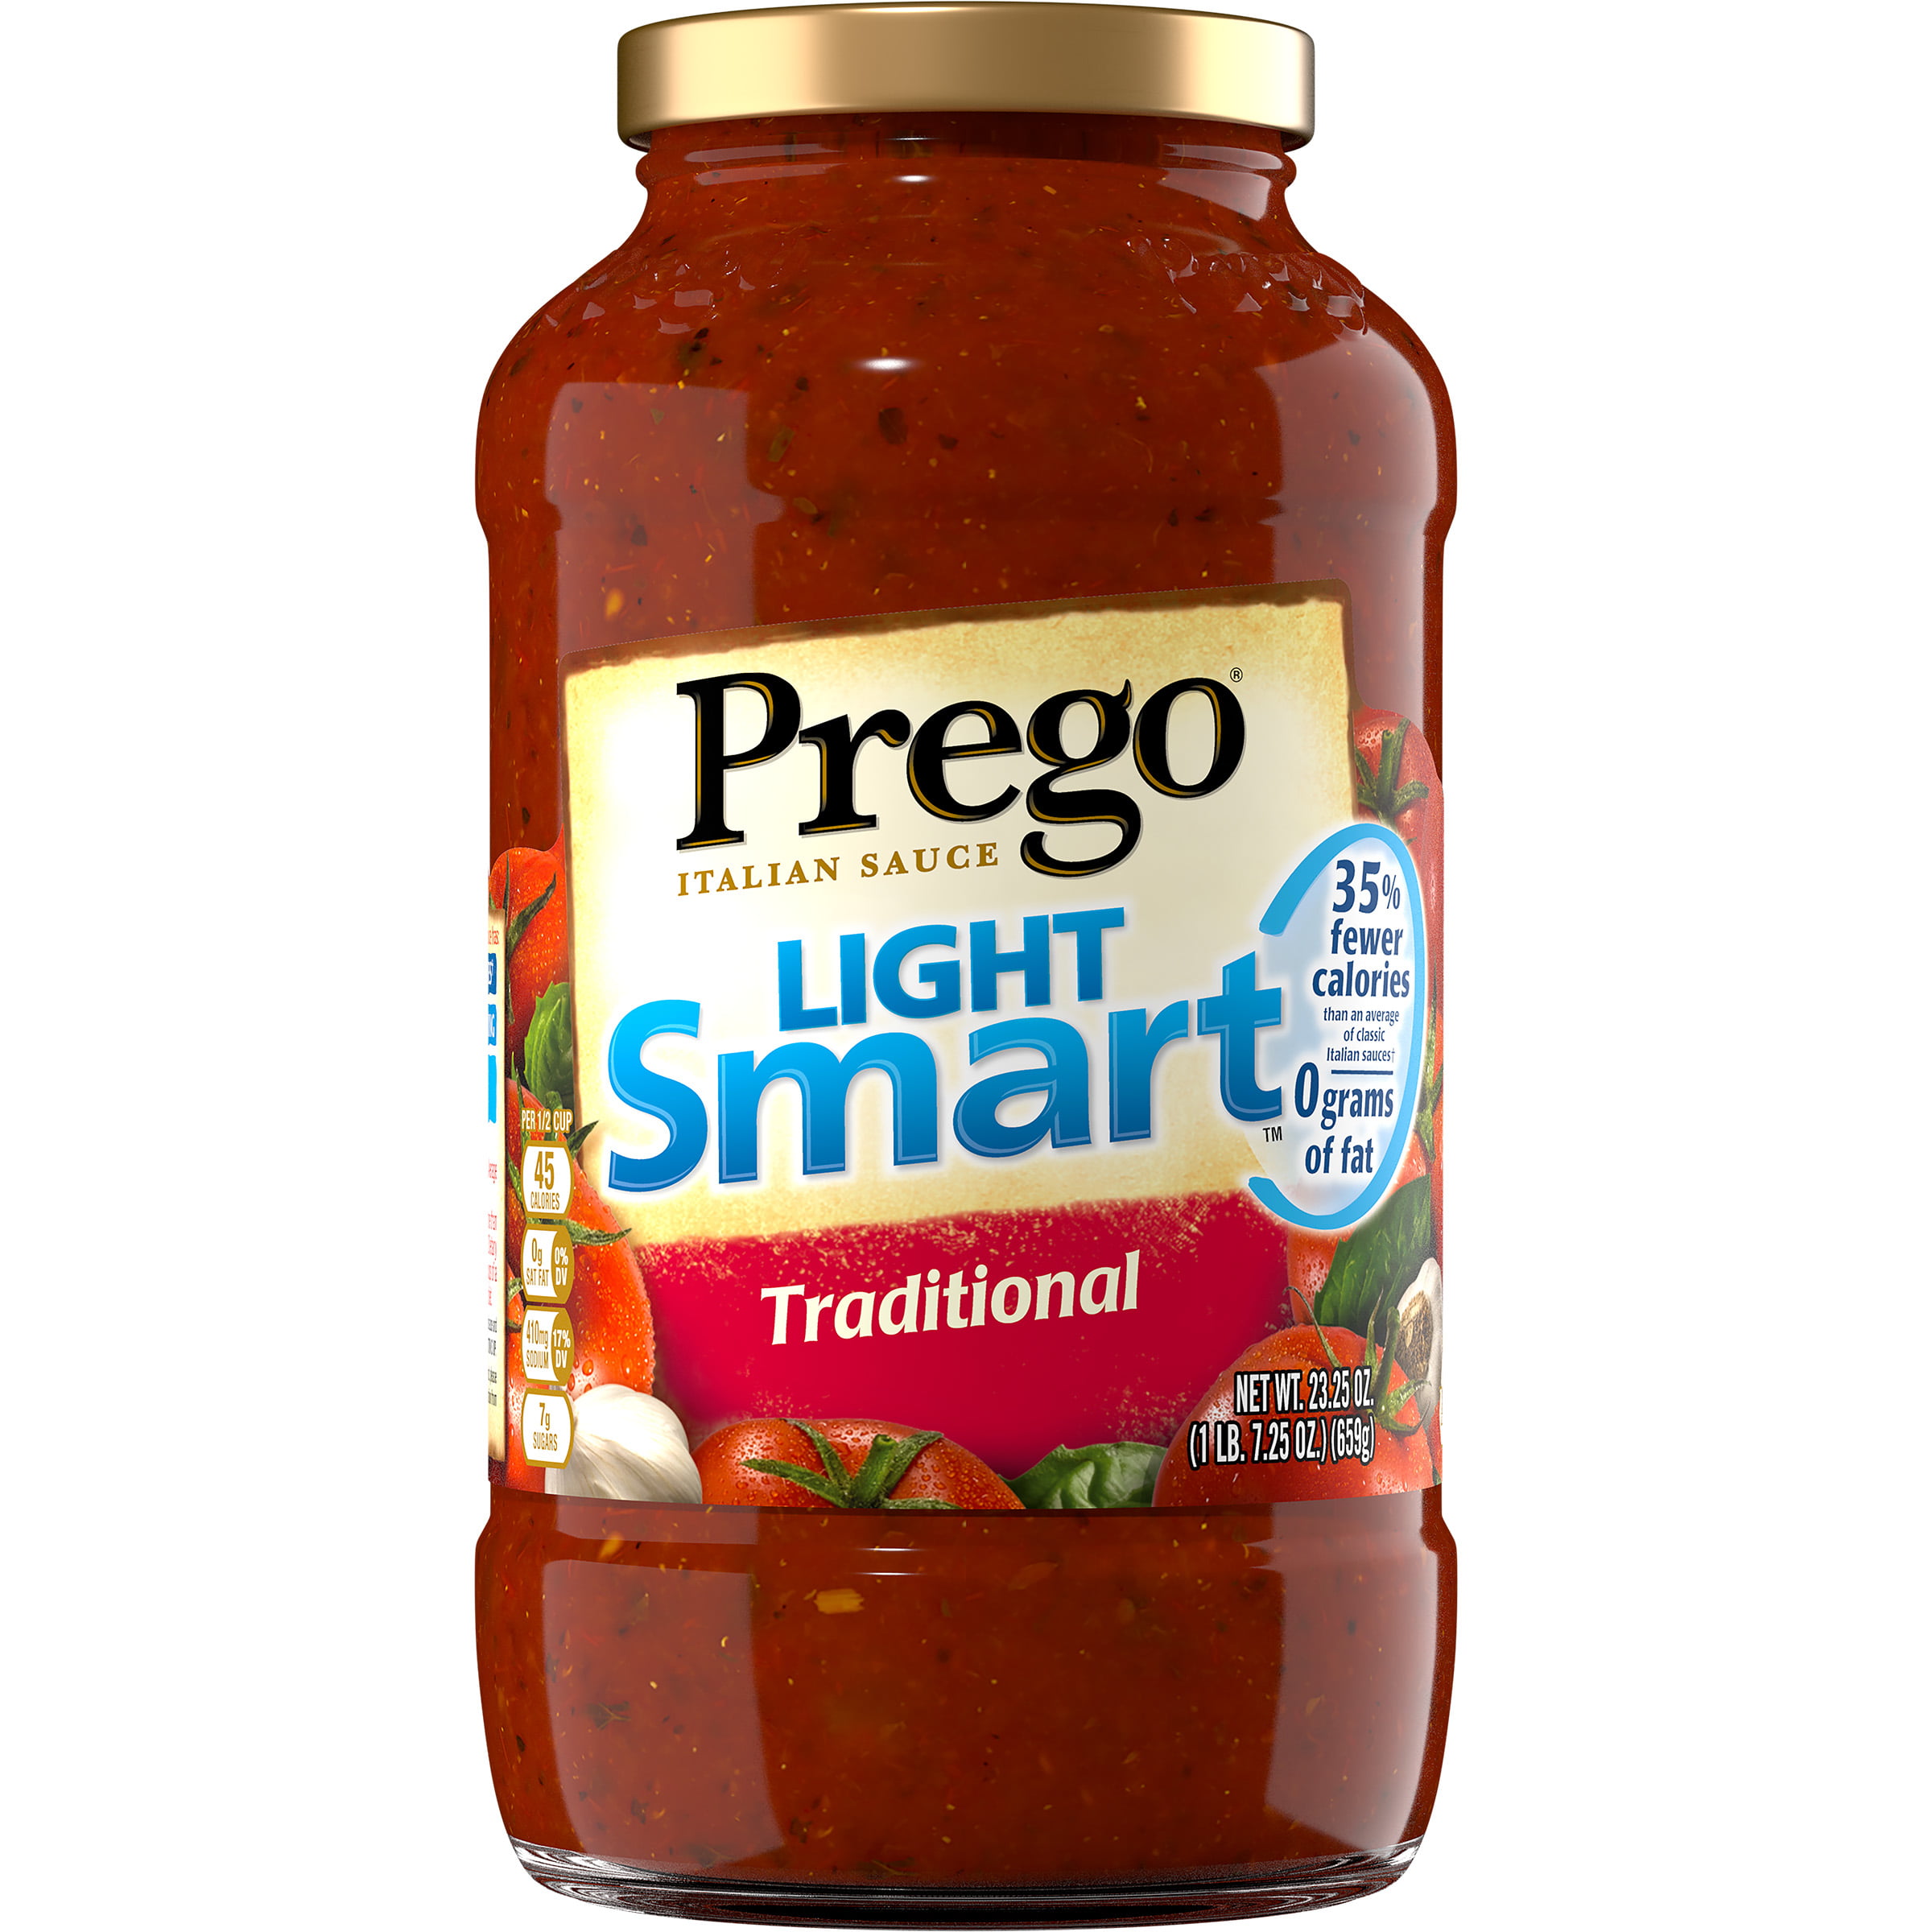 32 Prego Sauce Nutrition Label - Label Design Ideas 2020